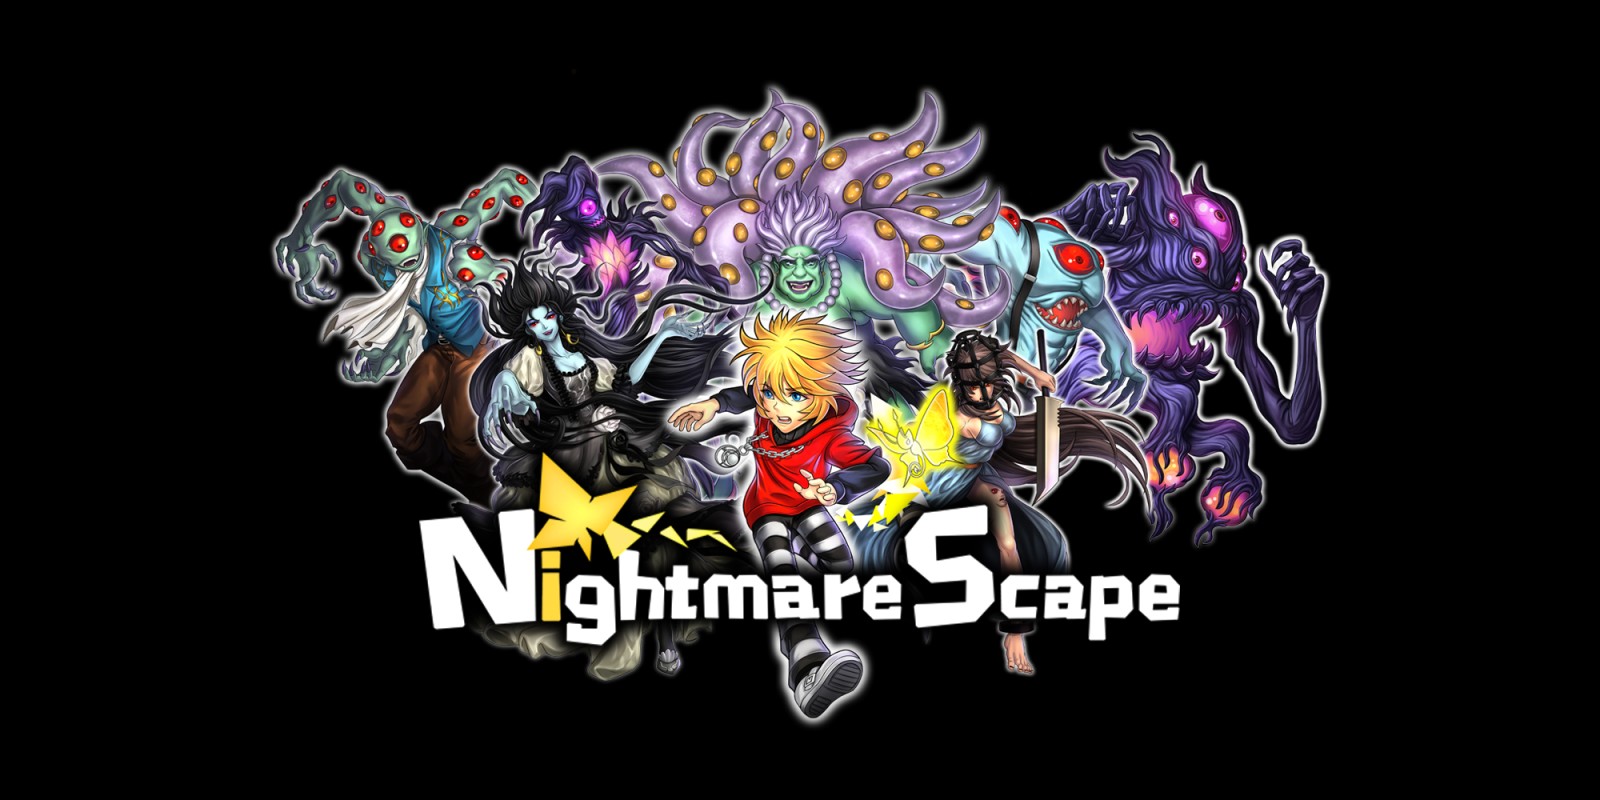 NightmareScape